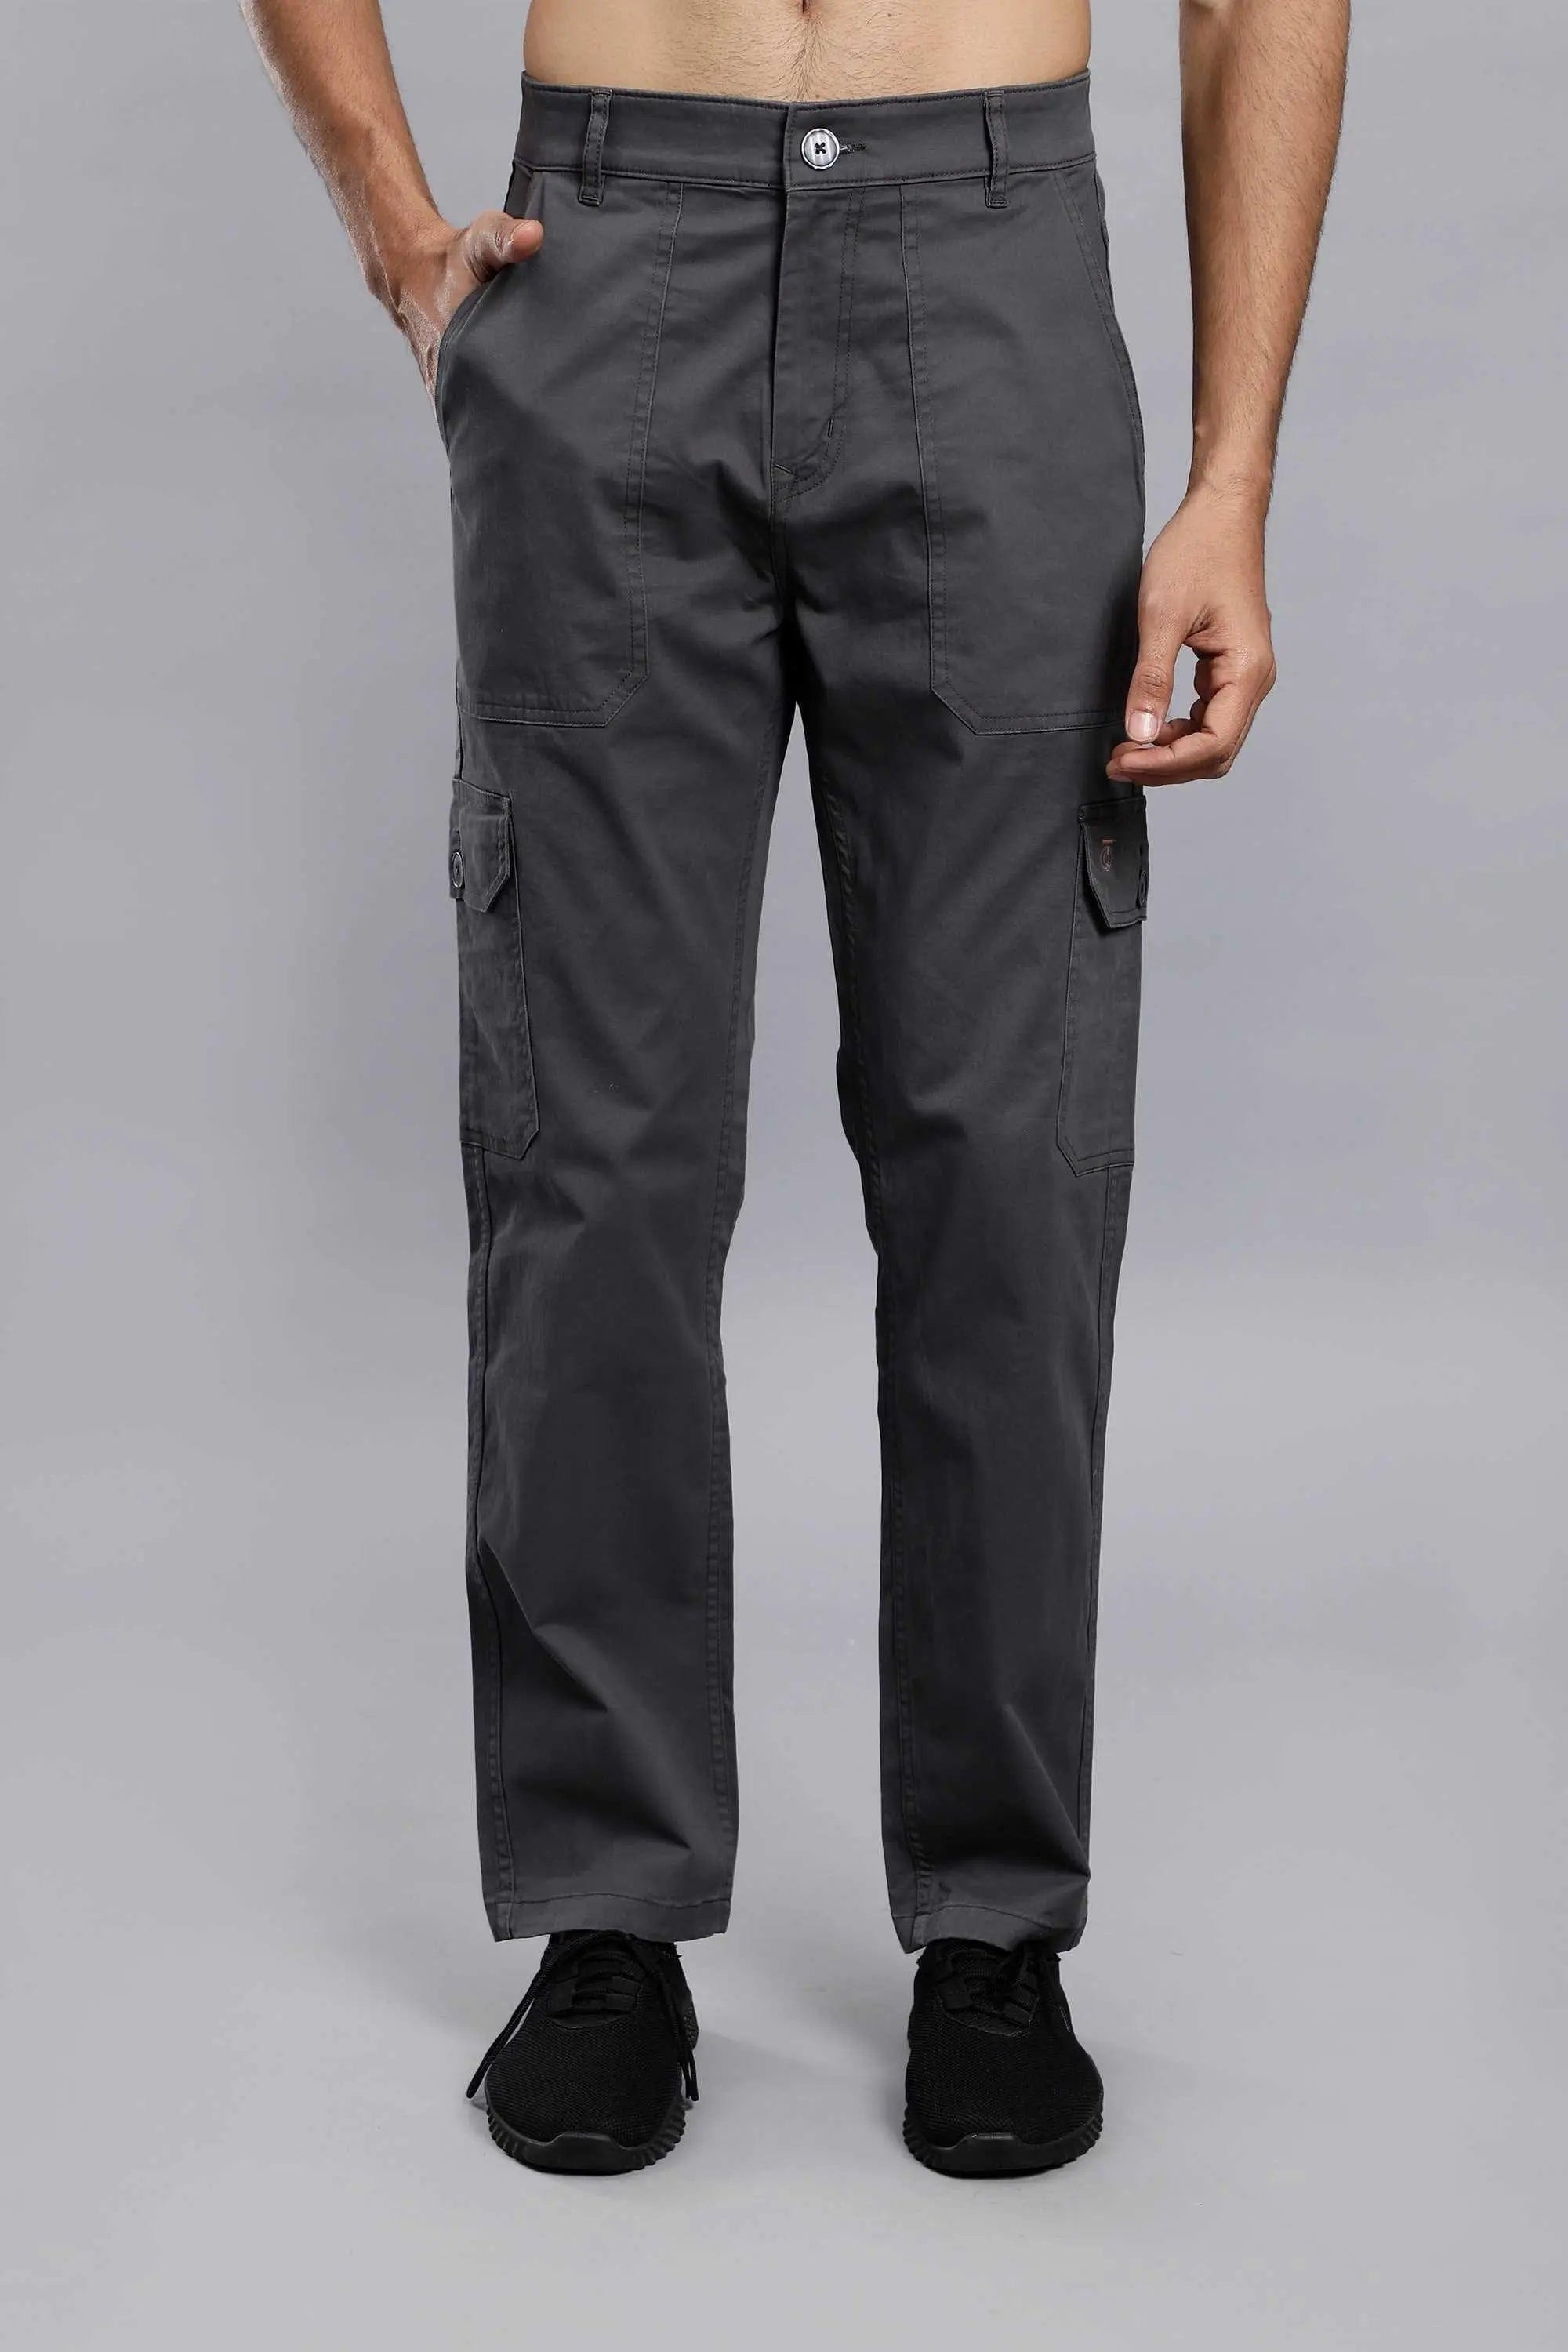 Men's Full Elastic Waist Loose Fit Pants Workwear Pull On Cargo Pants | eBay